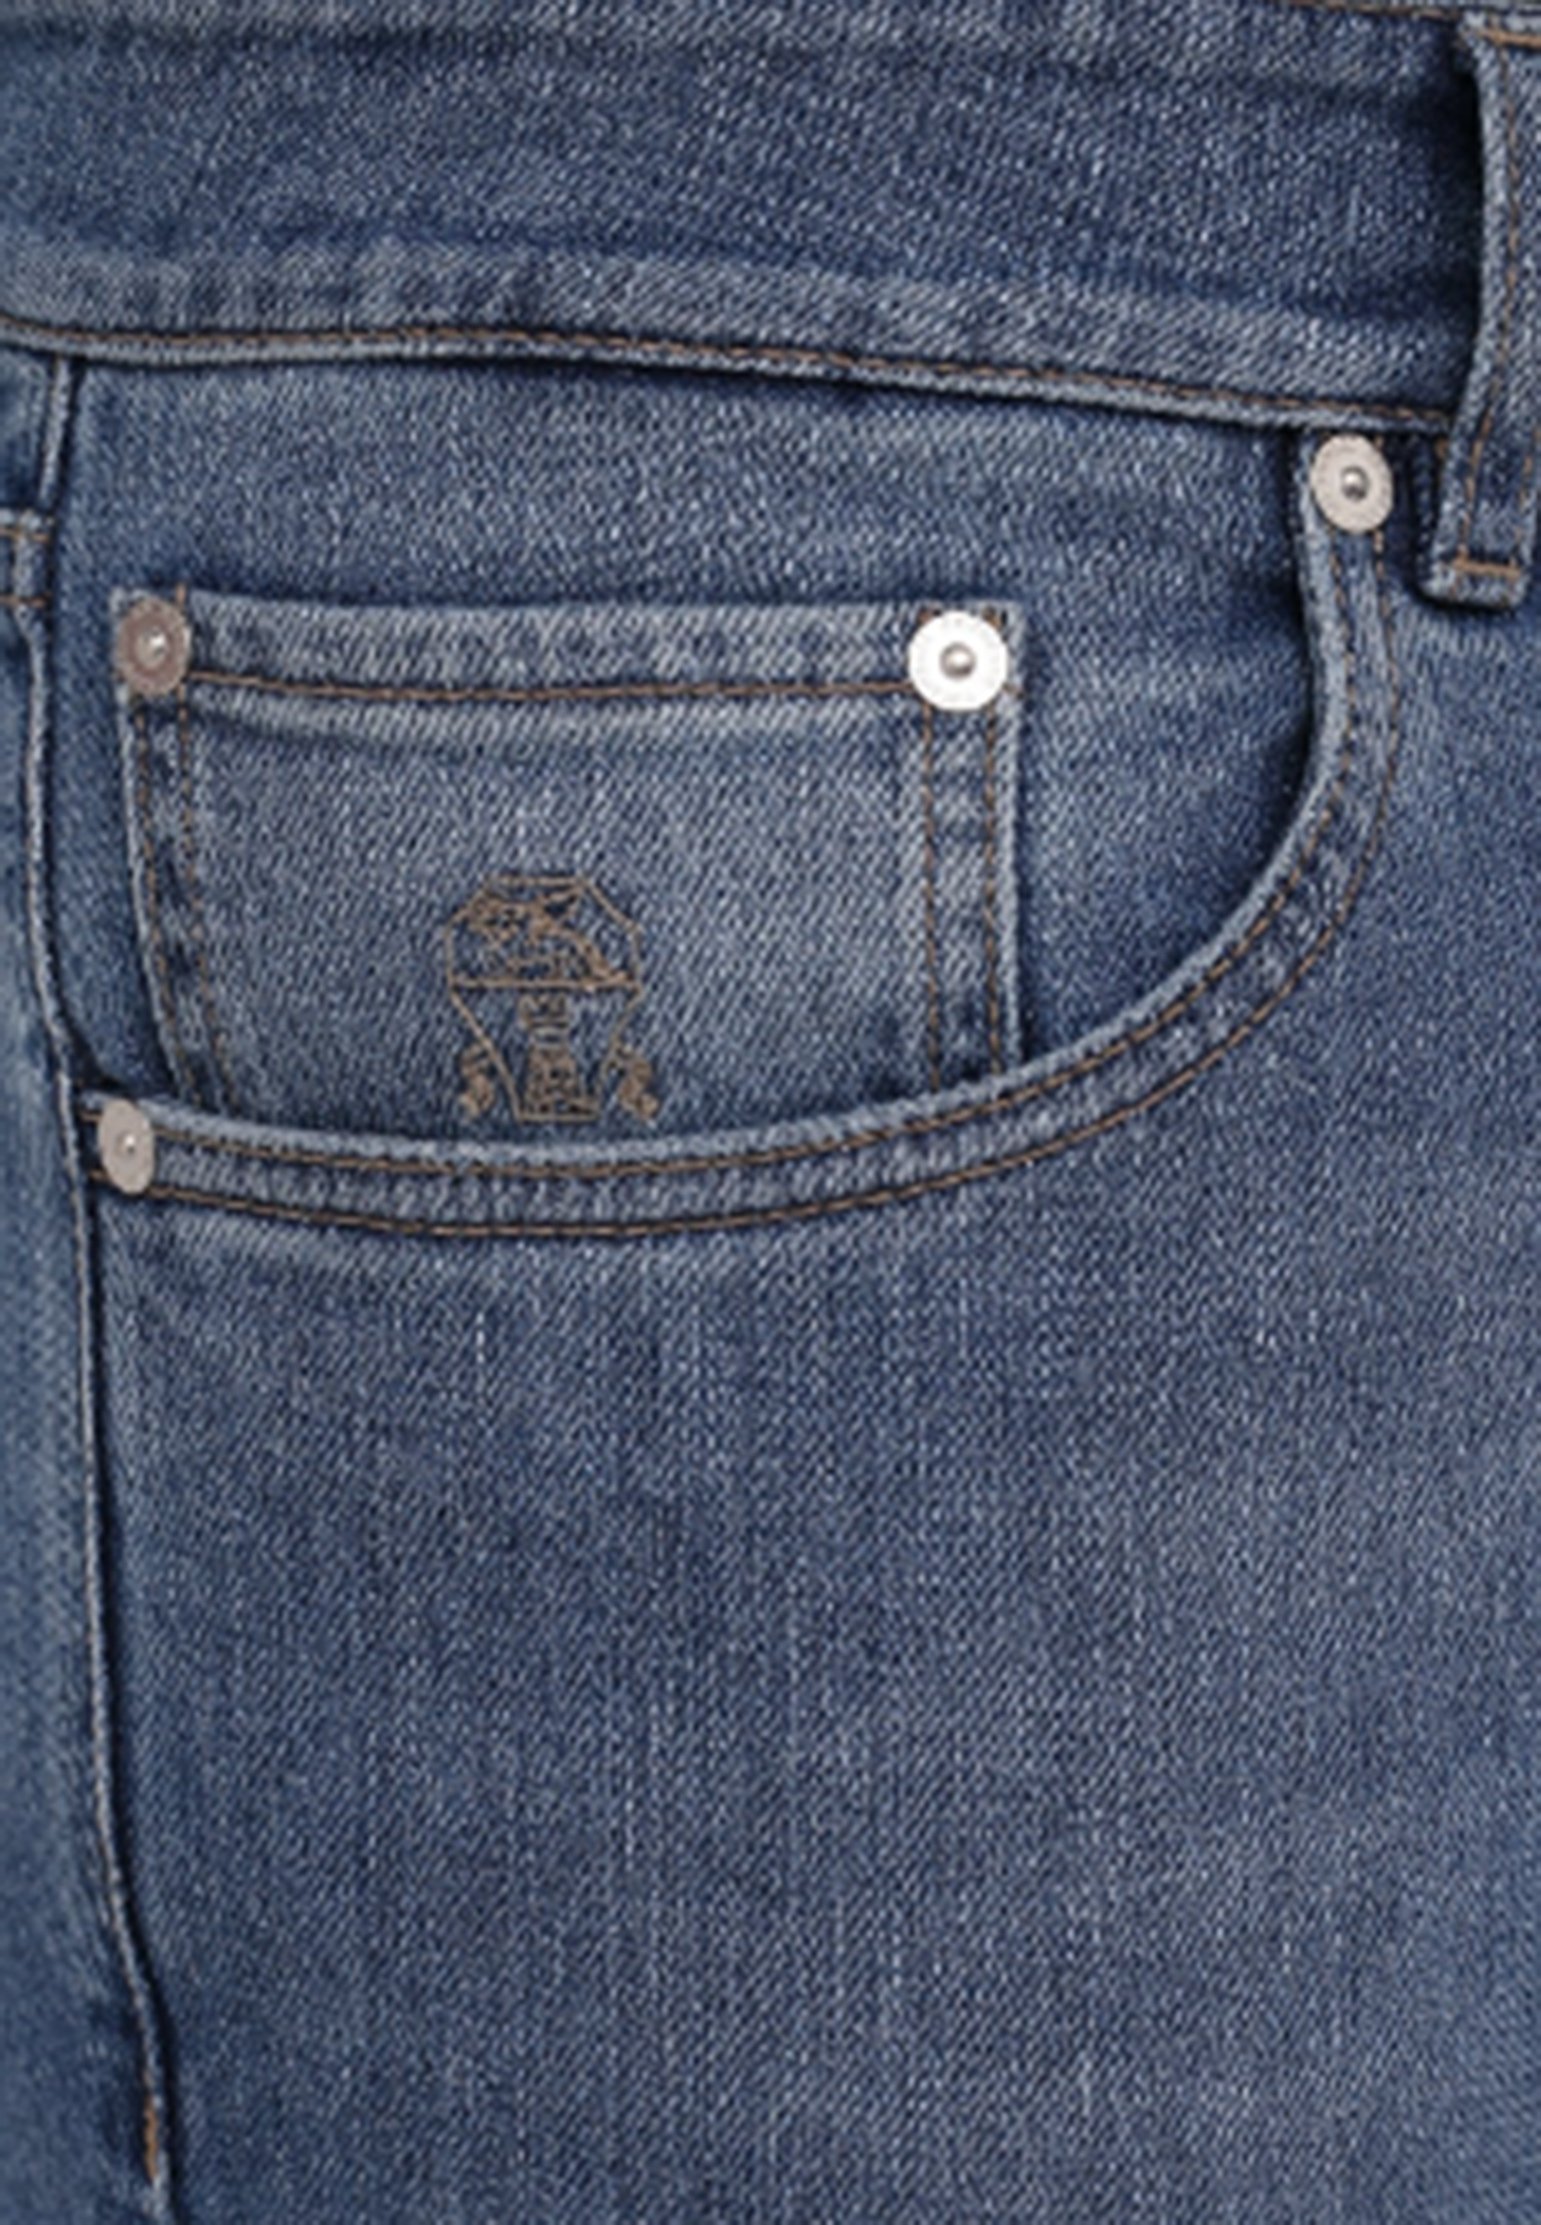 Pantalone BRUNELLO CUCINELLI Color: navy blue (Code: 1209) in online store Allure